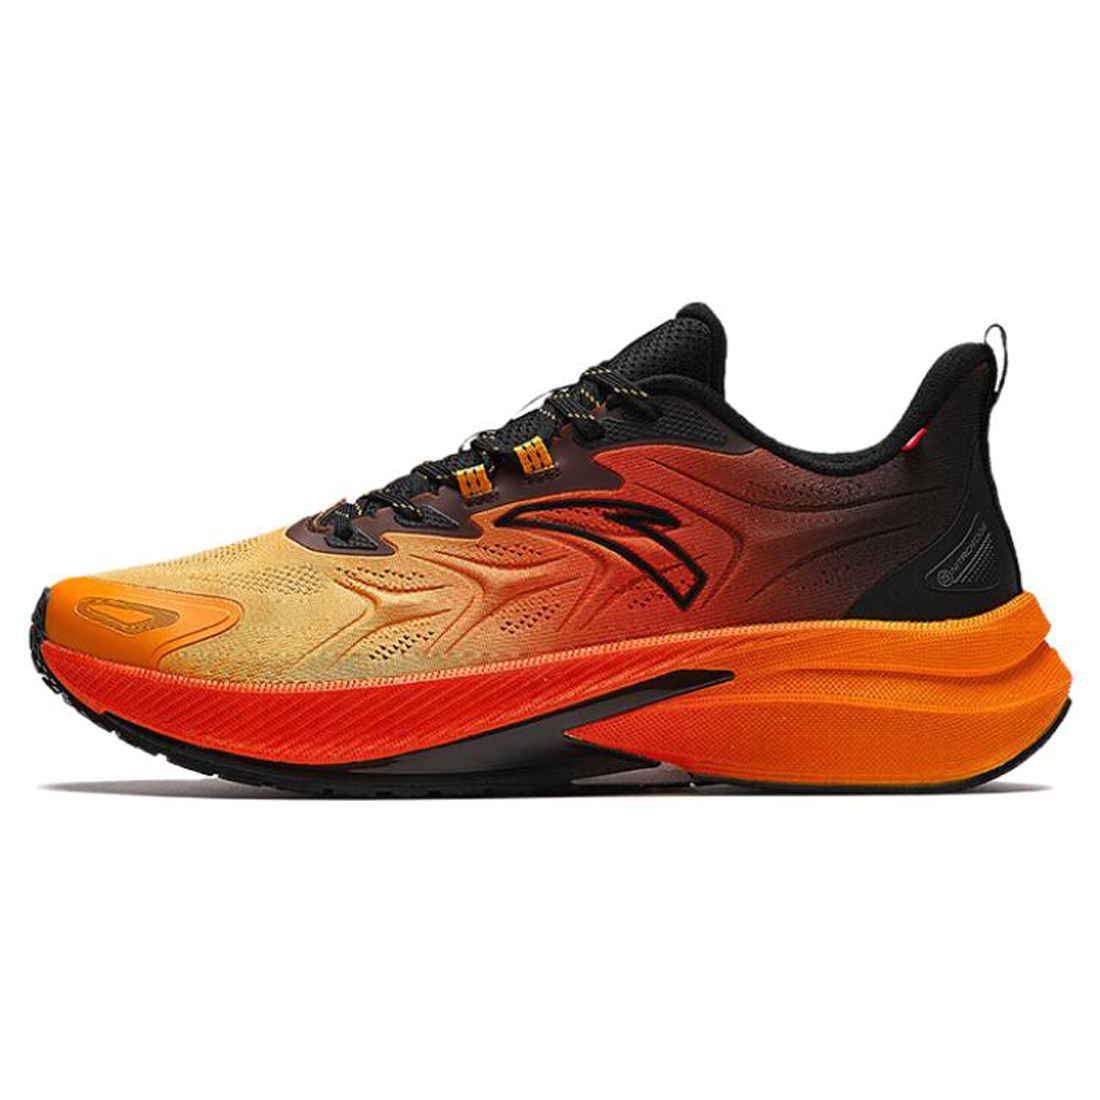 Anta Rocket Shoes 5 ’Orange Black'